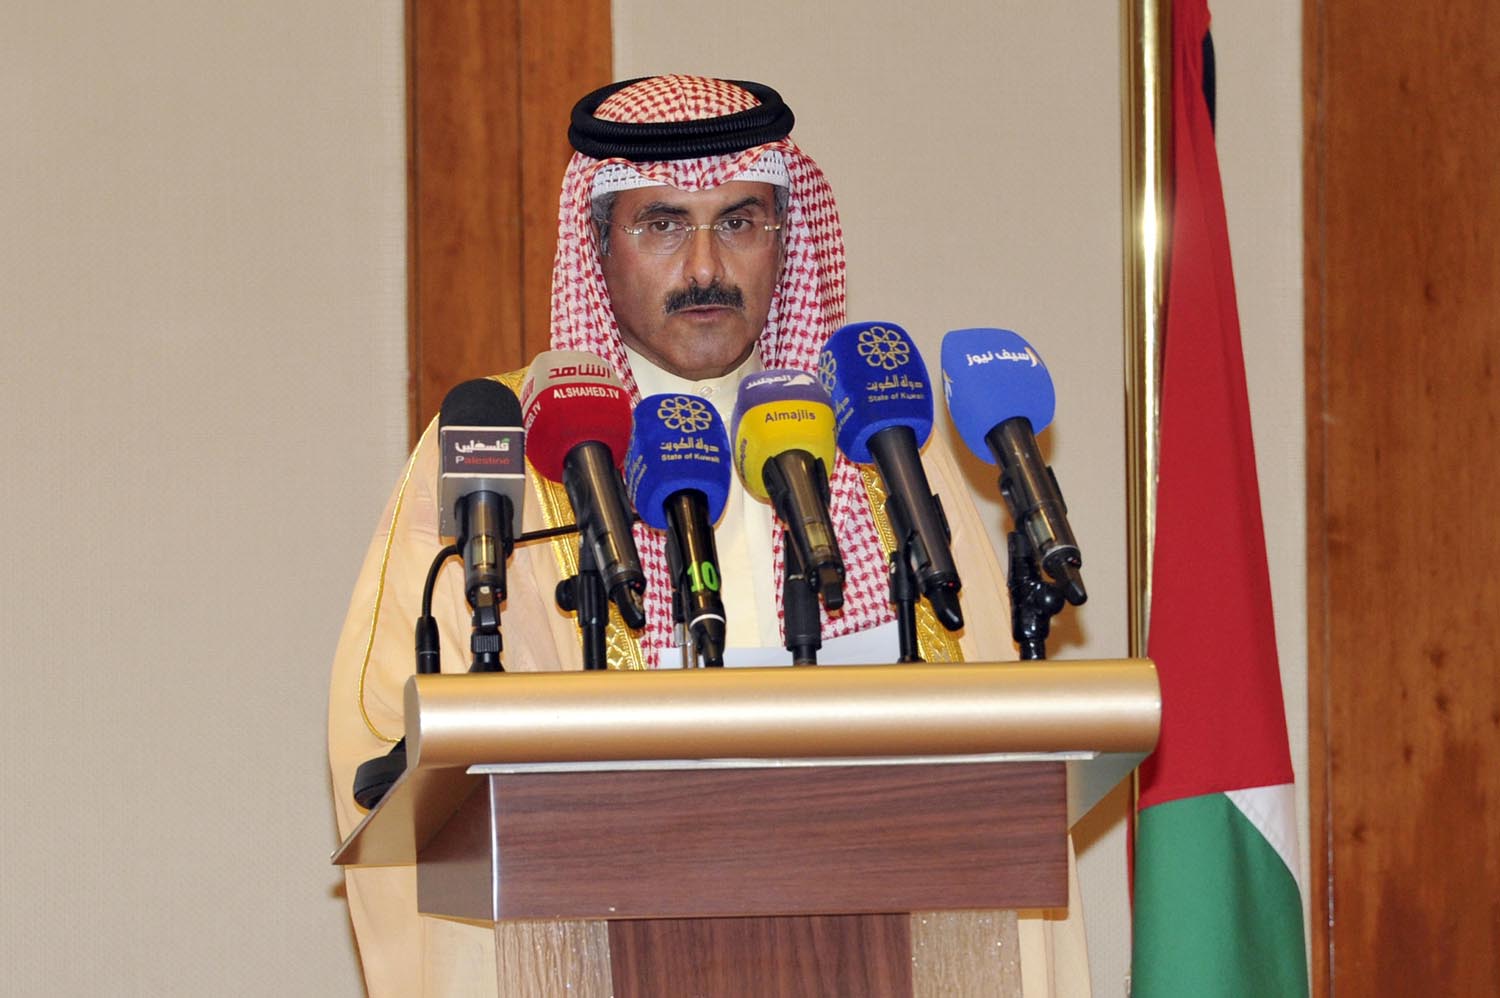 Chairman and Director General of Kuwait News Agency (KUNA) Sheikh Mubarak Duaij Al-Ibrahim Al-Sabah delivers his speech